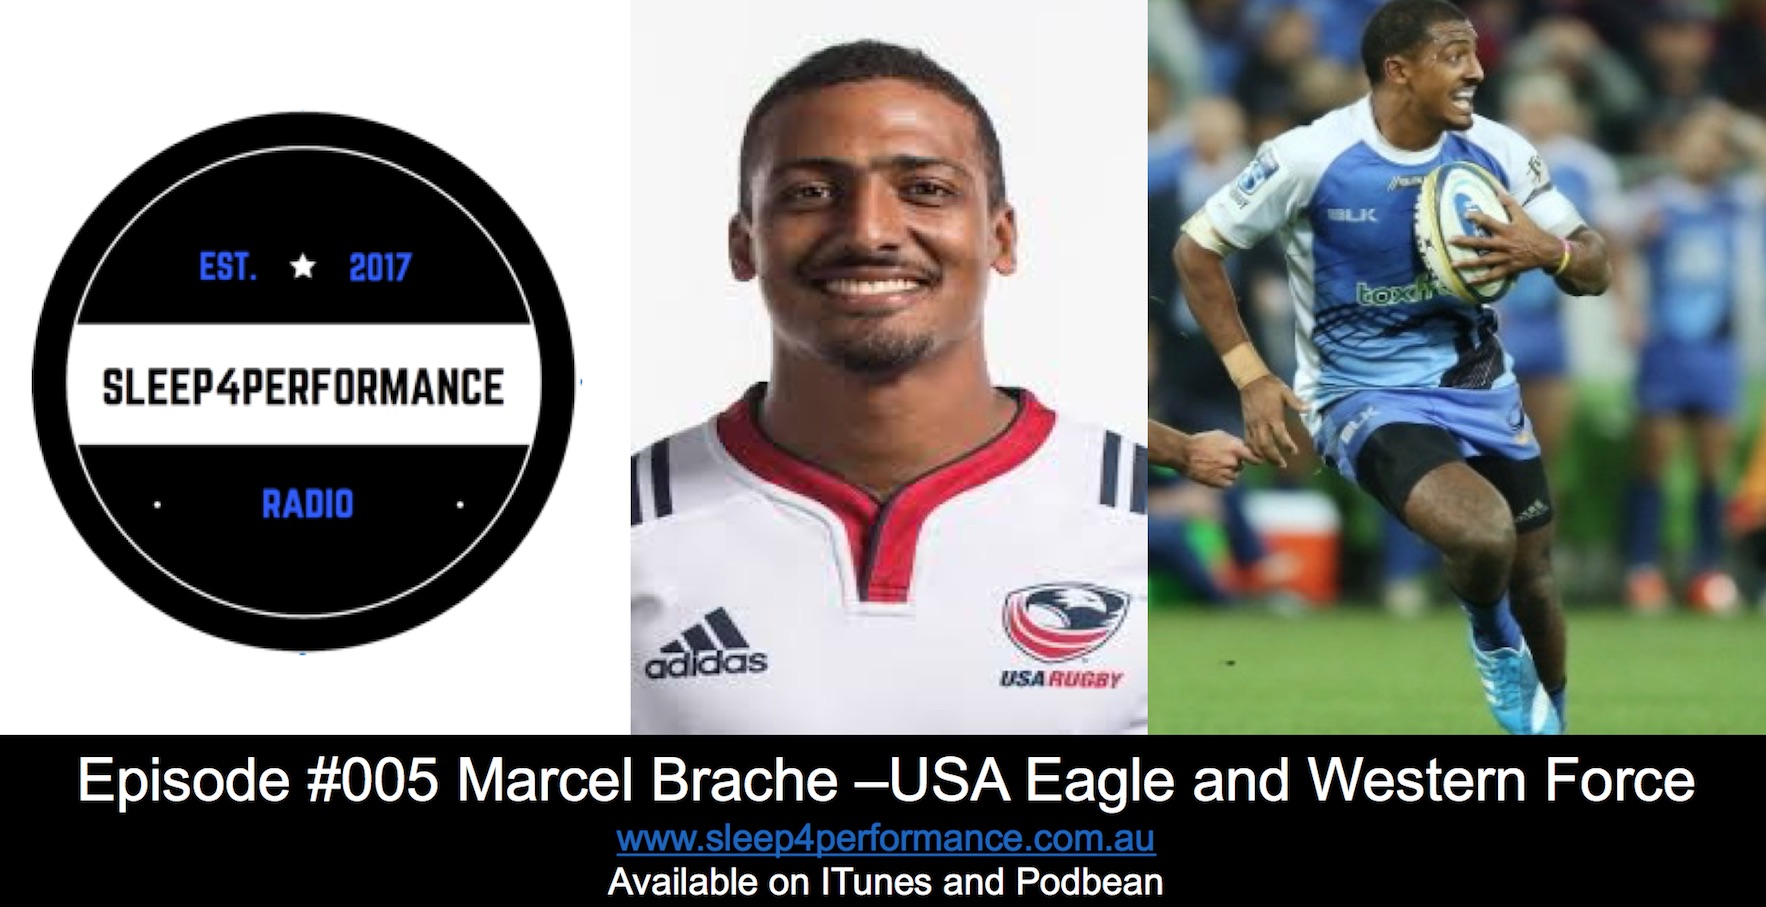 Season 1 #Episode 4:  Brache-USA Eagle and Western Force